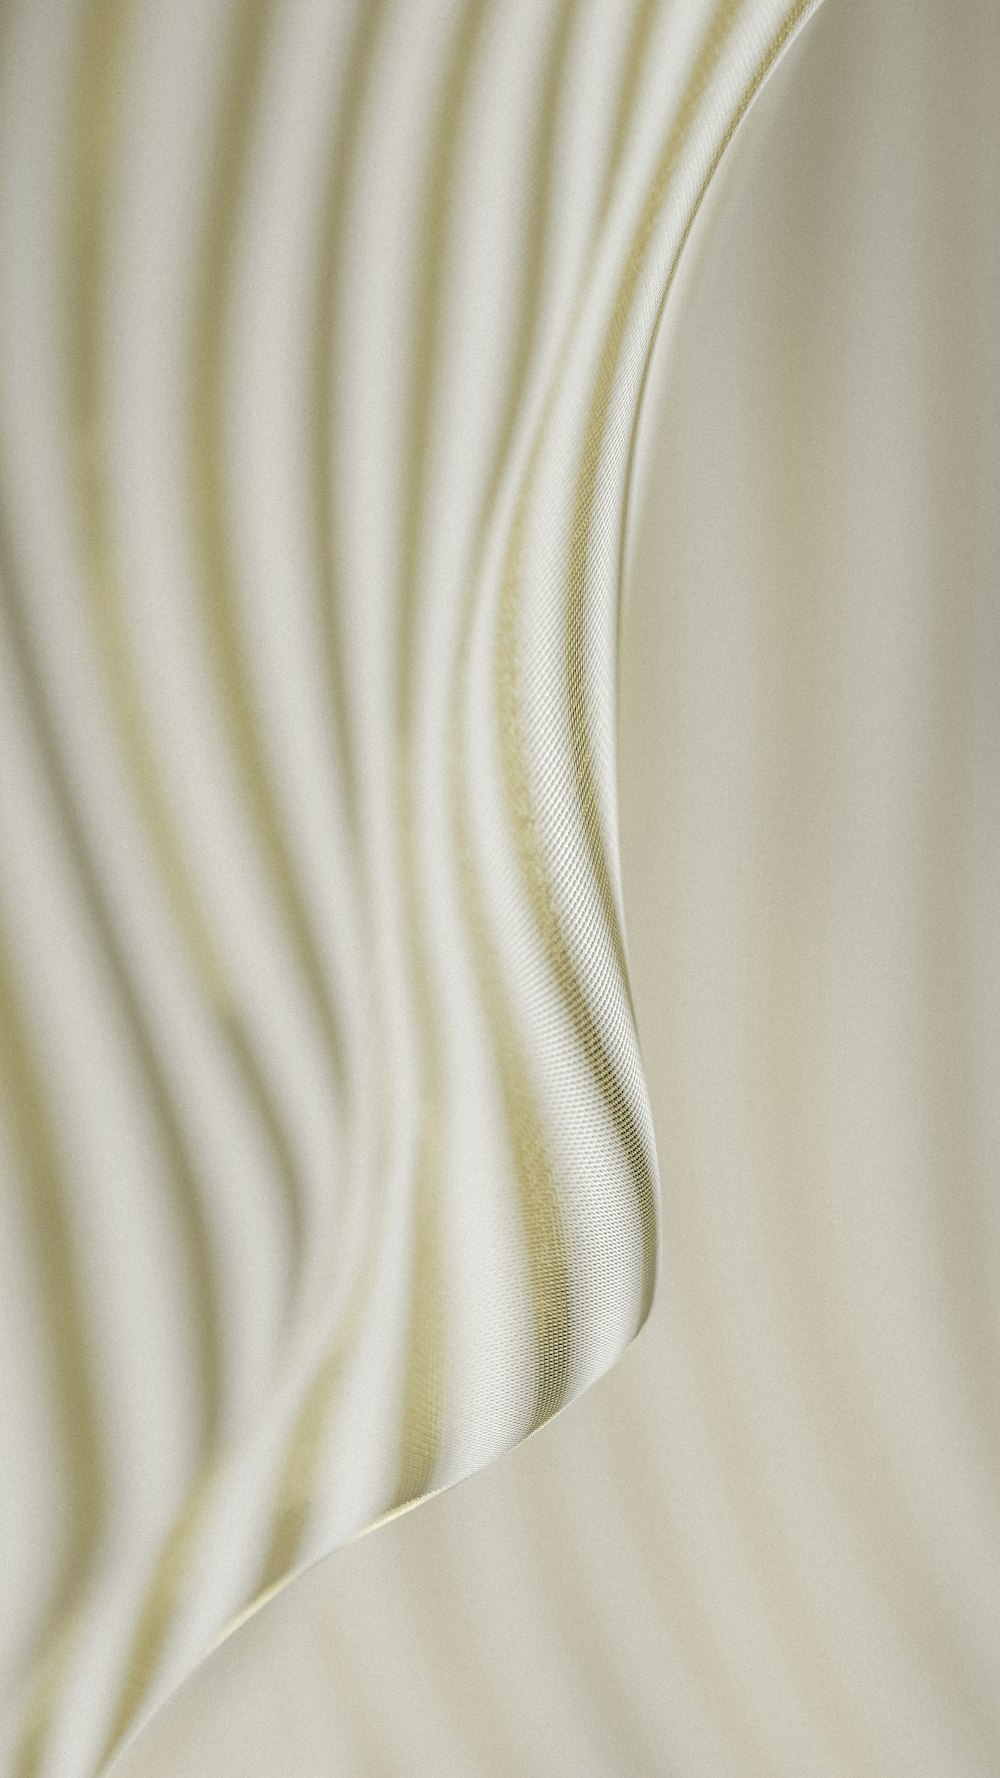 gros plan d’un tissu blanc ondulé